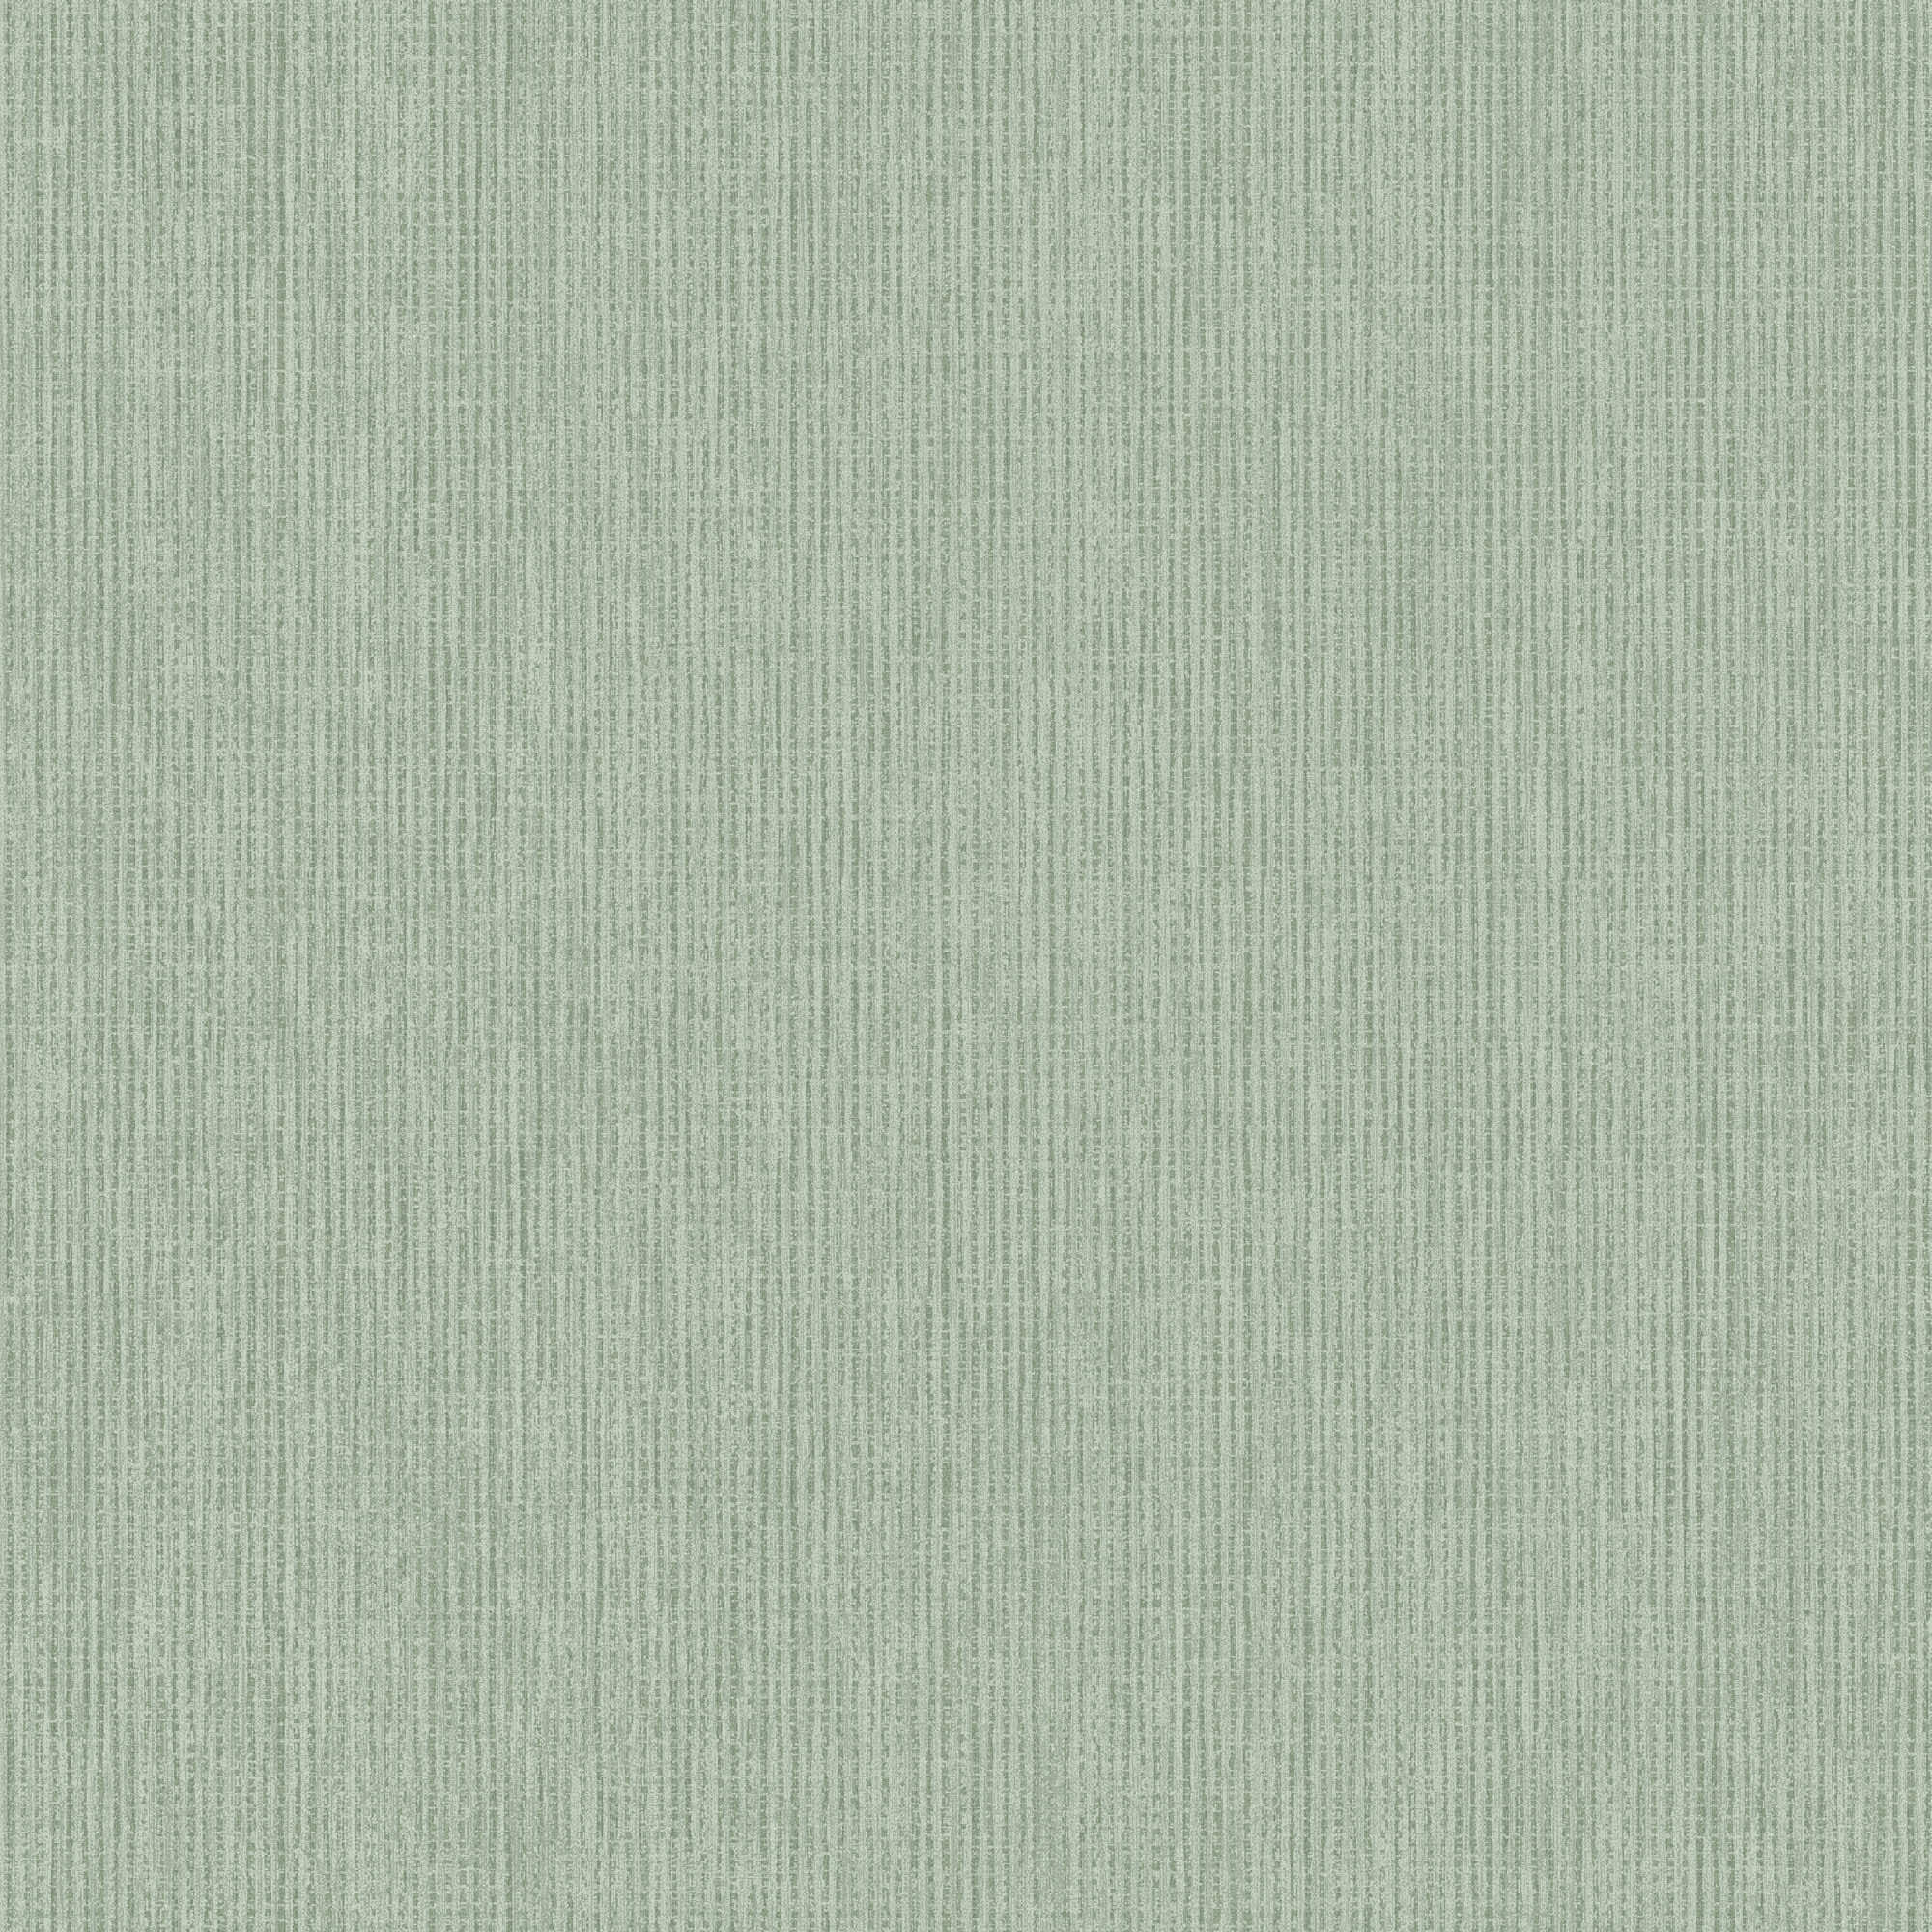 Image of Holden Decor Linen Texture Sage Wallpaper - 10.05m x 53cm